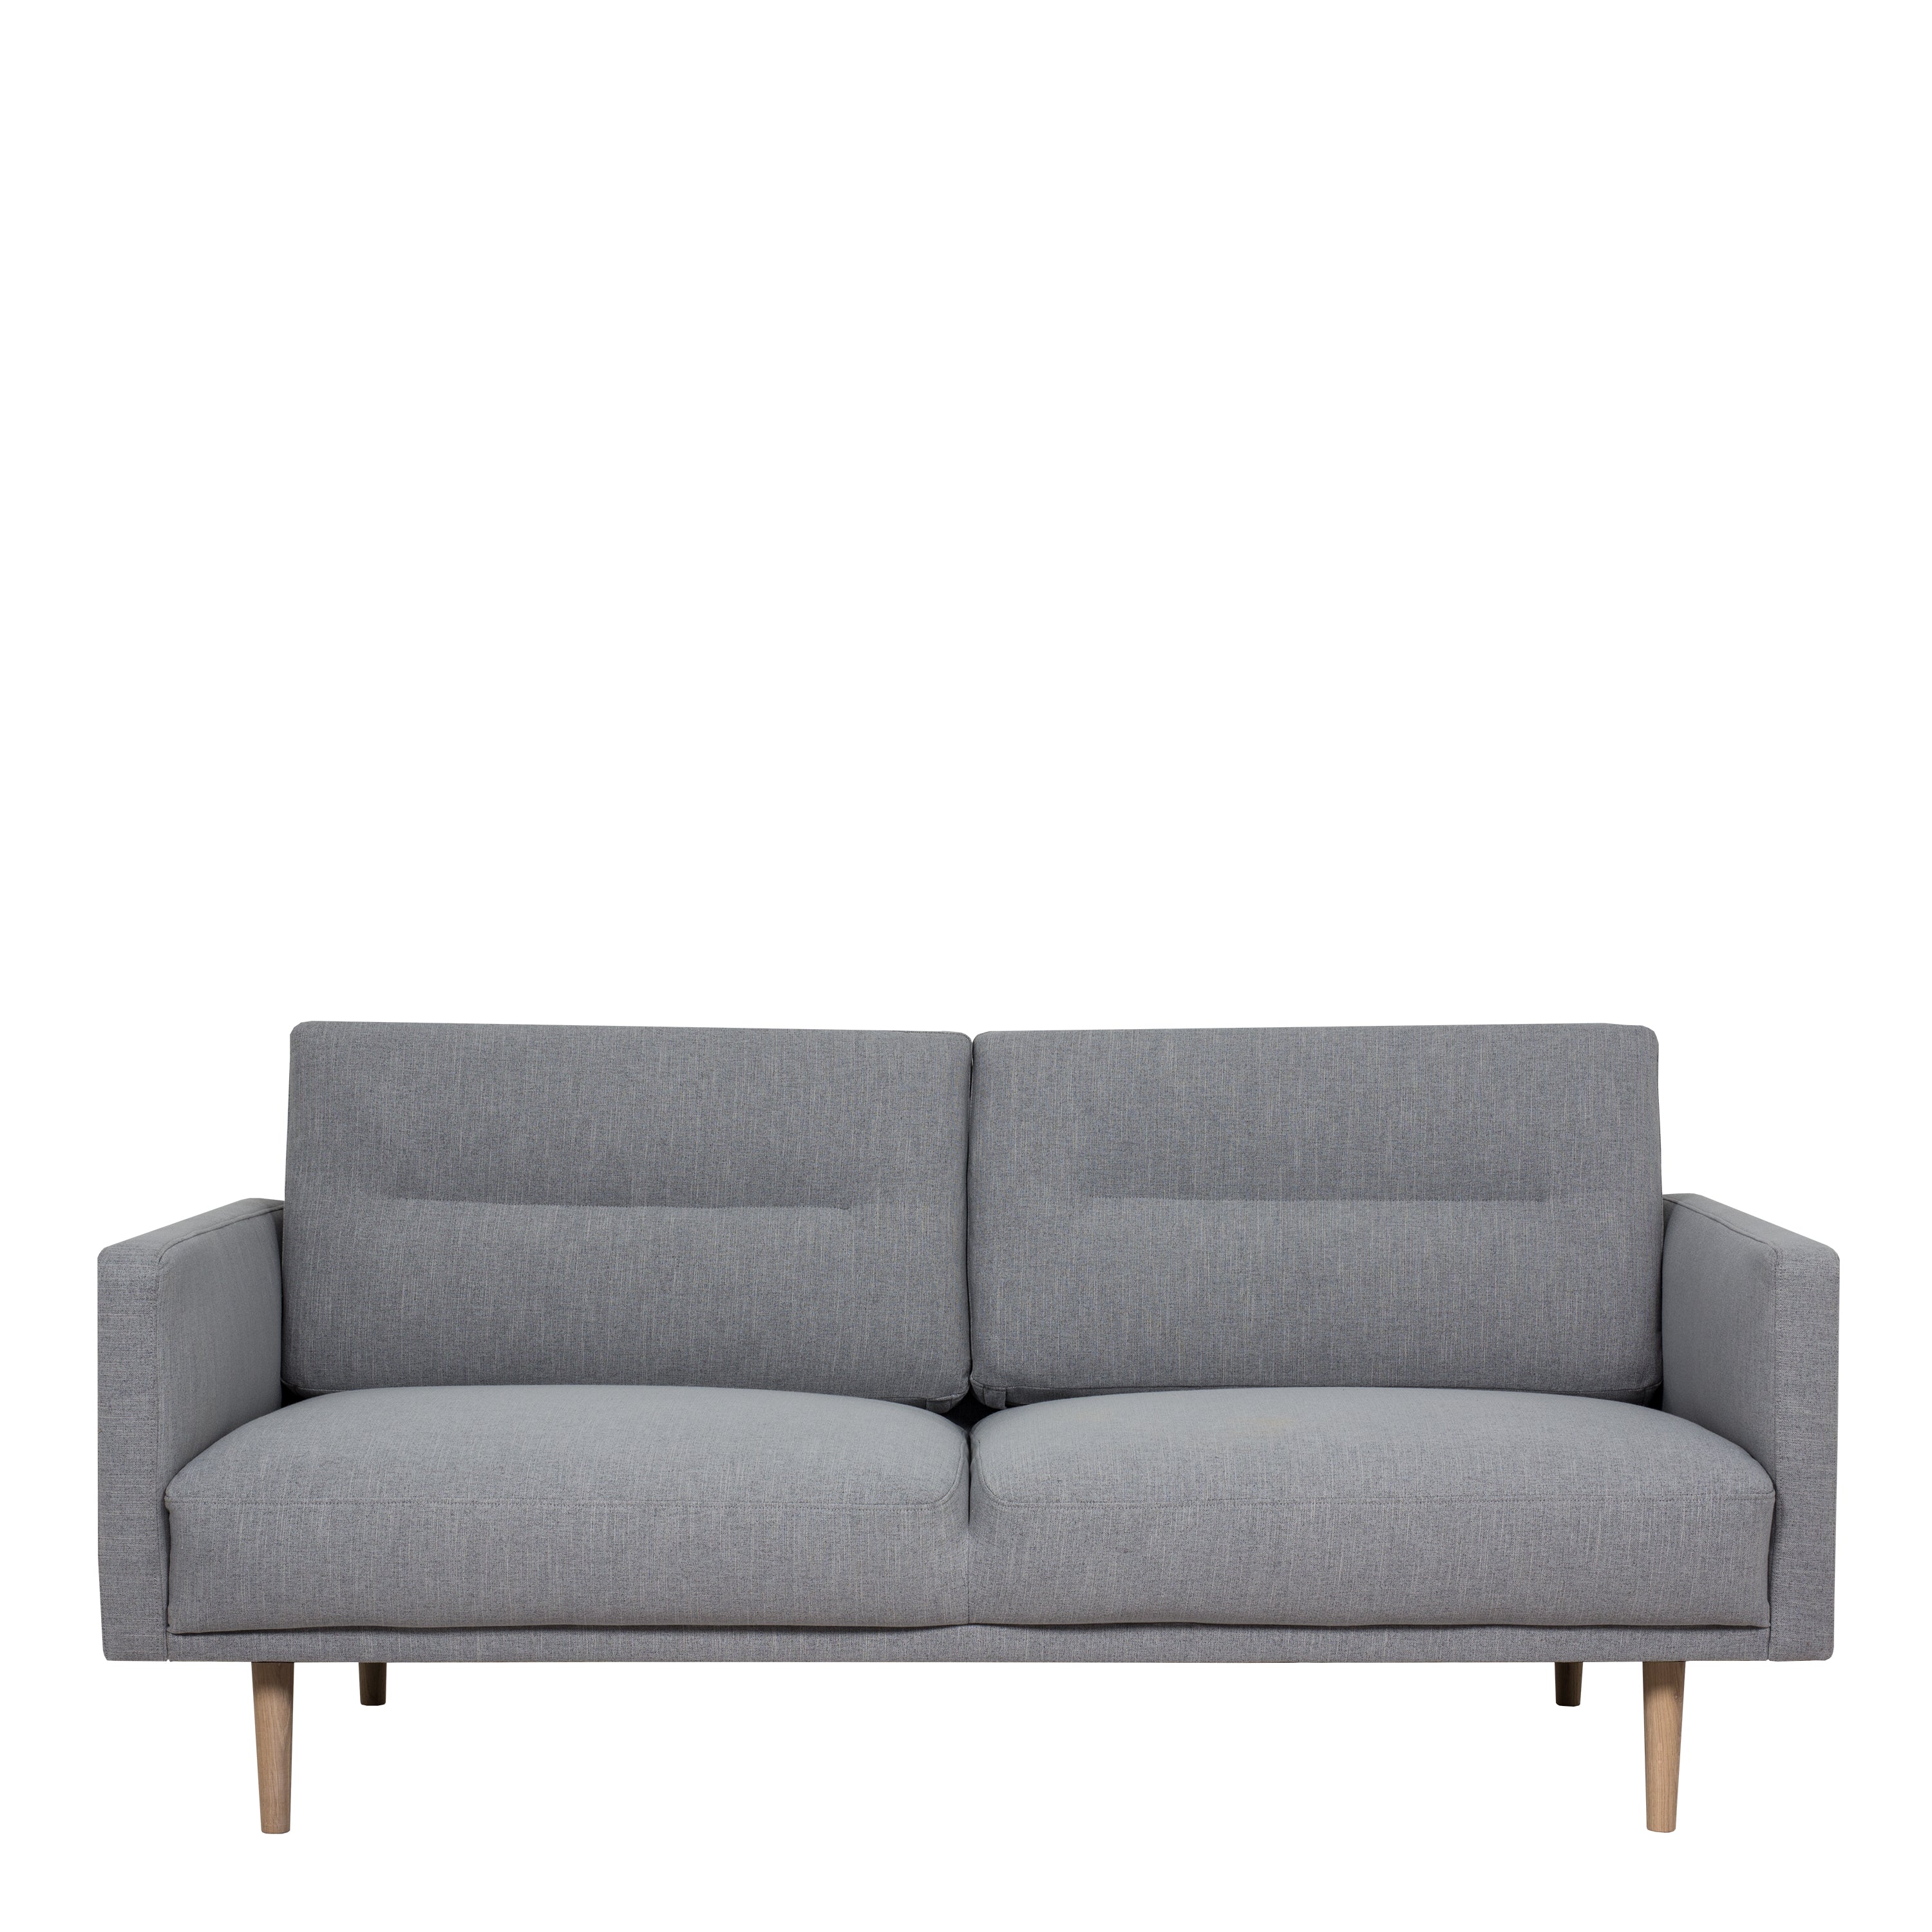 Larvik 2.5 Seater Sofa - Grey, Oak Legs